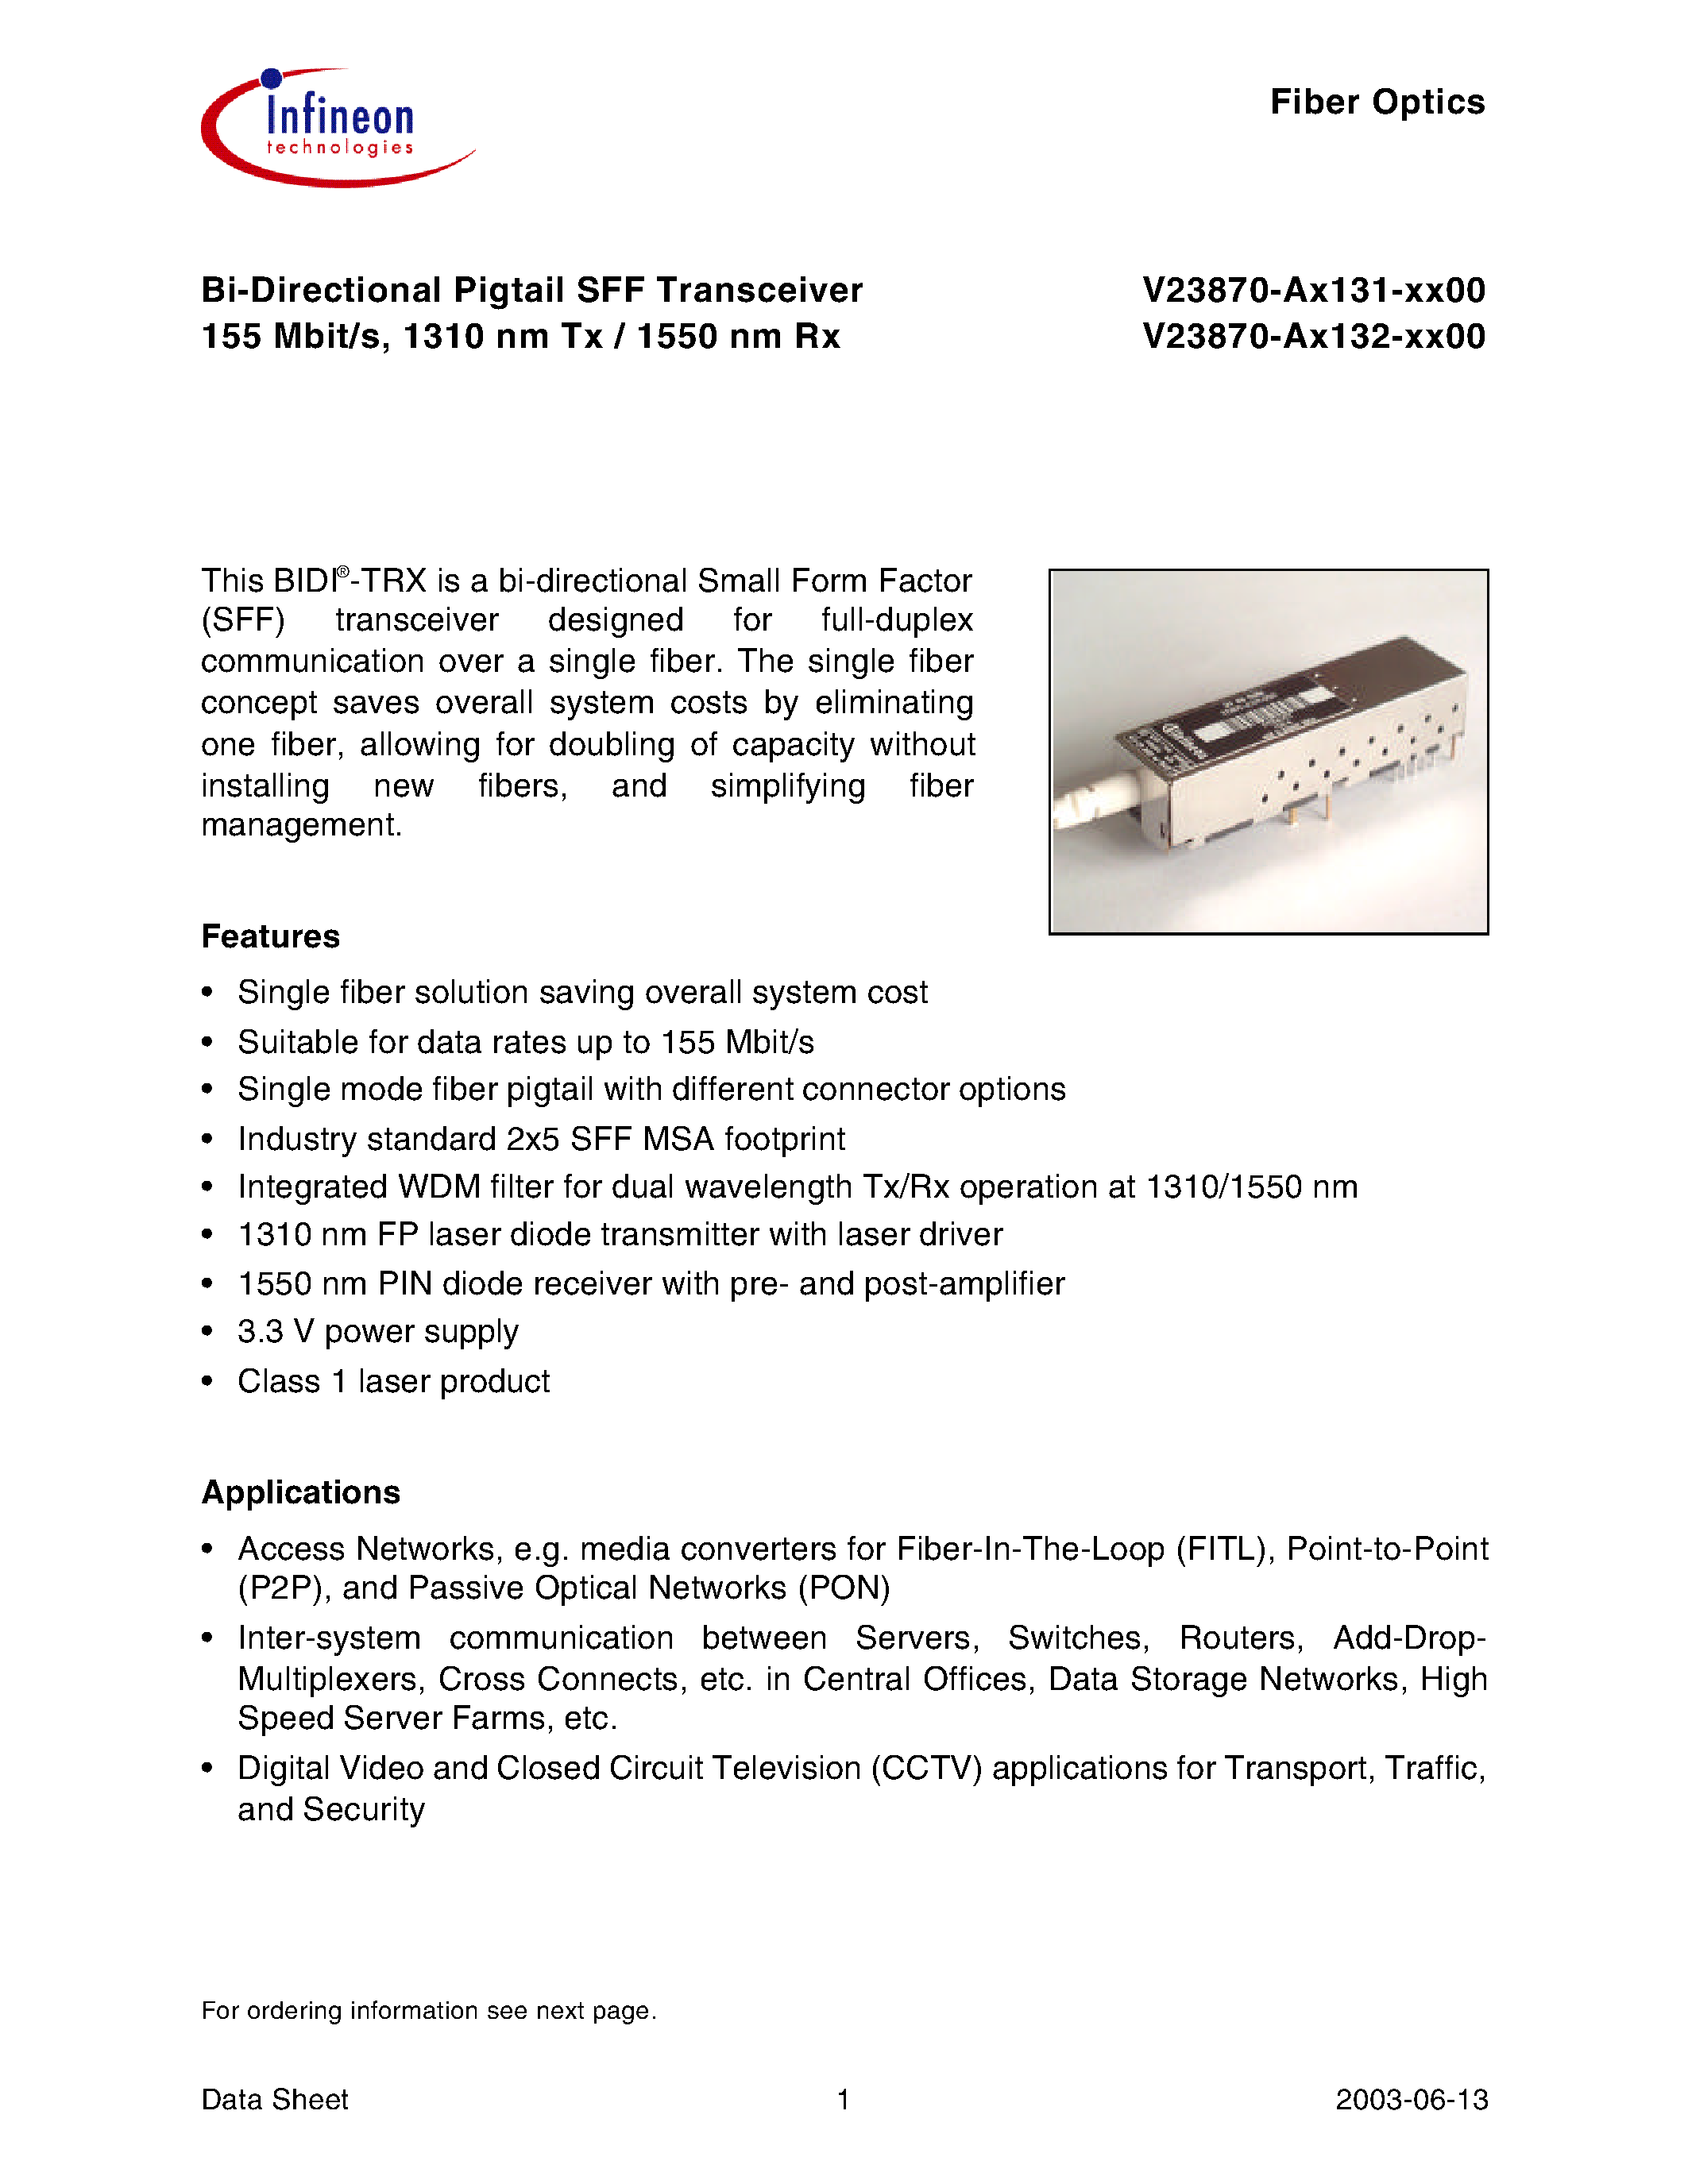 Даташит V23870-A3131-A600 - Bi-Directional Pigtail SFF Transceiver 155 Mbit/s/ 1310 nm Tx / 1550 nm Rx страница 1